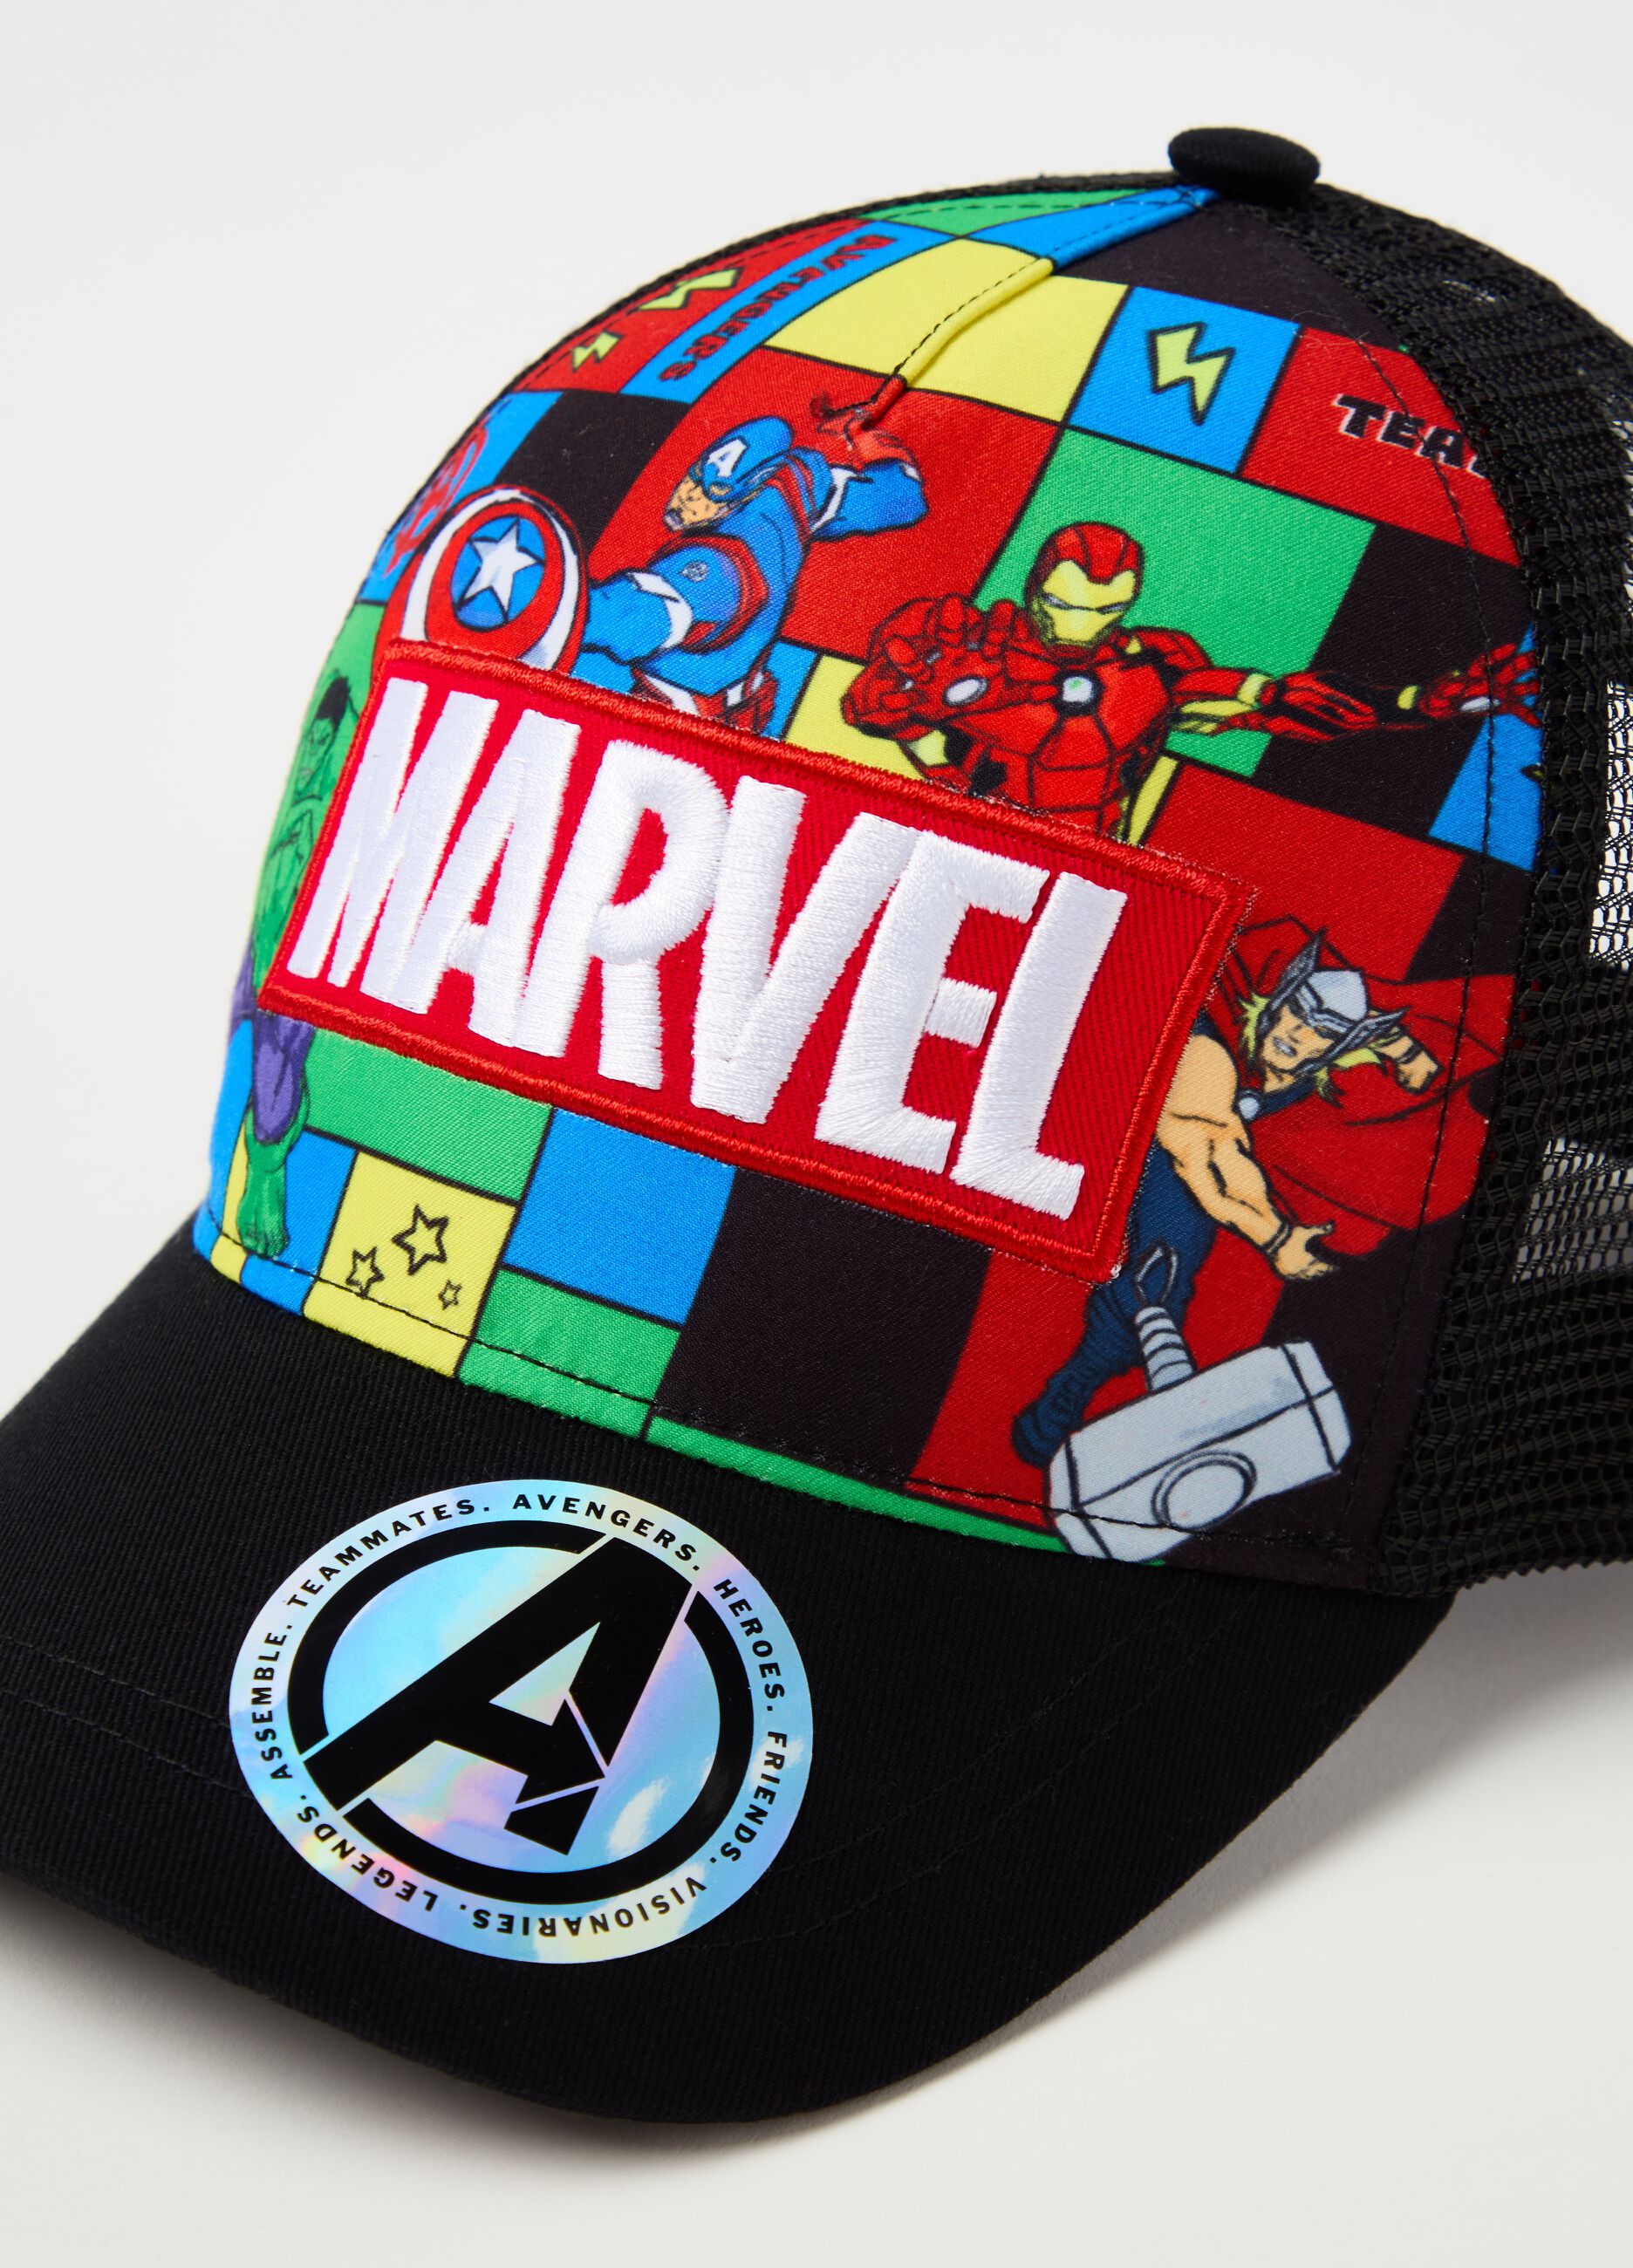 The Avengers baseball cap